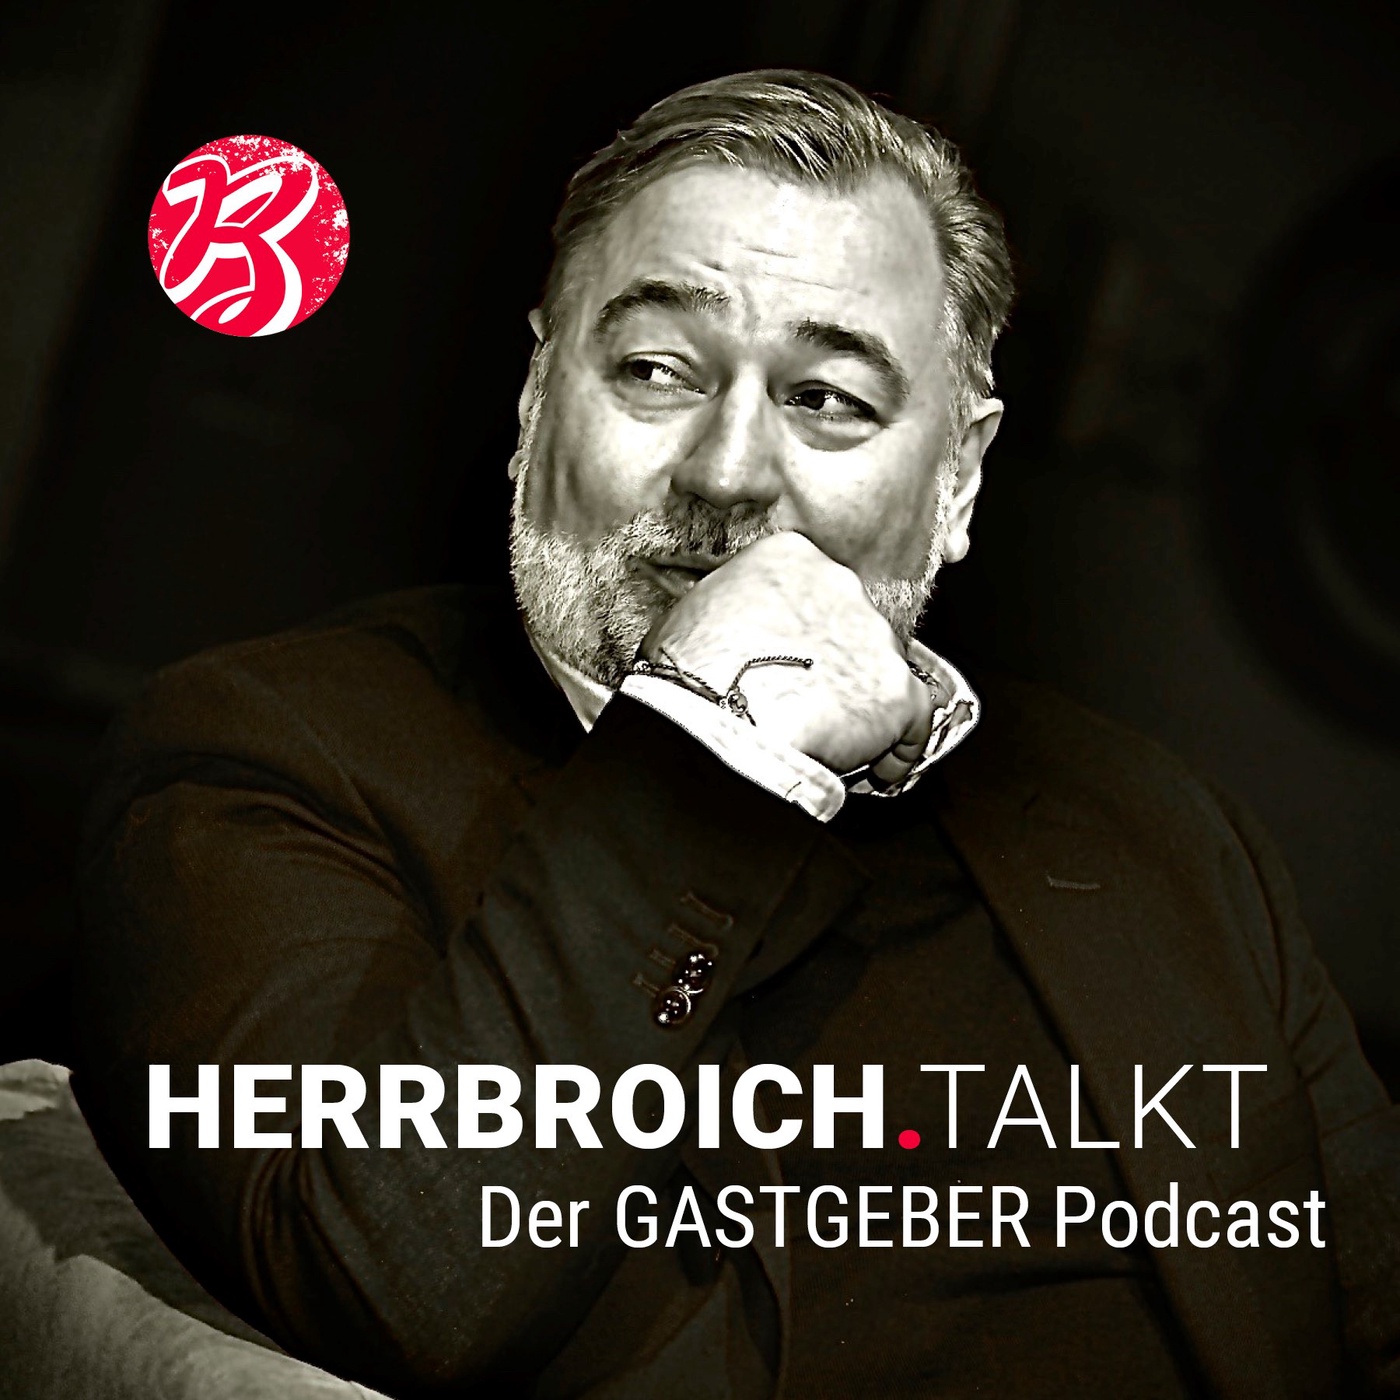 HERR BROICH TALKT - Der Gastgeber Podcast